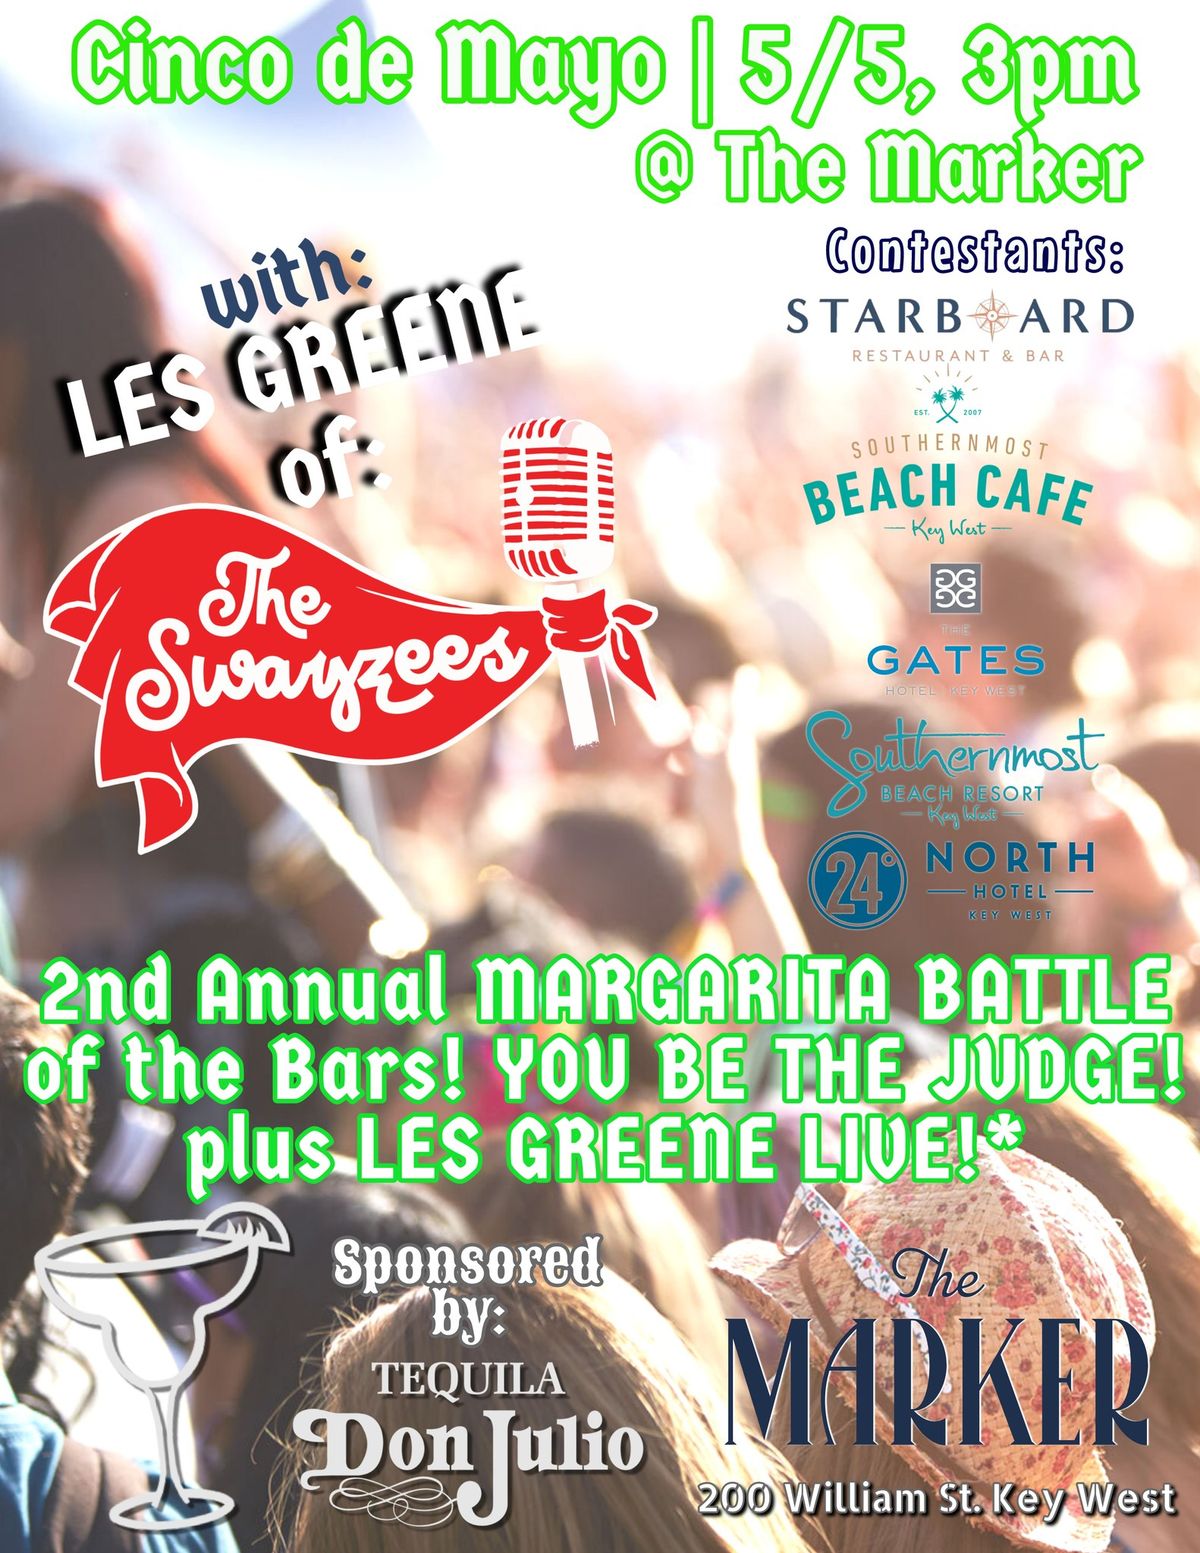 Cinco de Mayo 2nd Annual Margarita Battle of the Bars ~ Plus Les Greene Live!